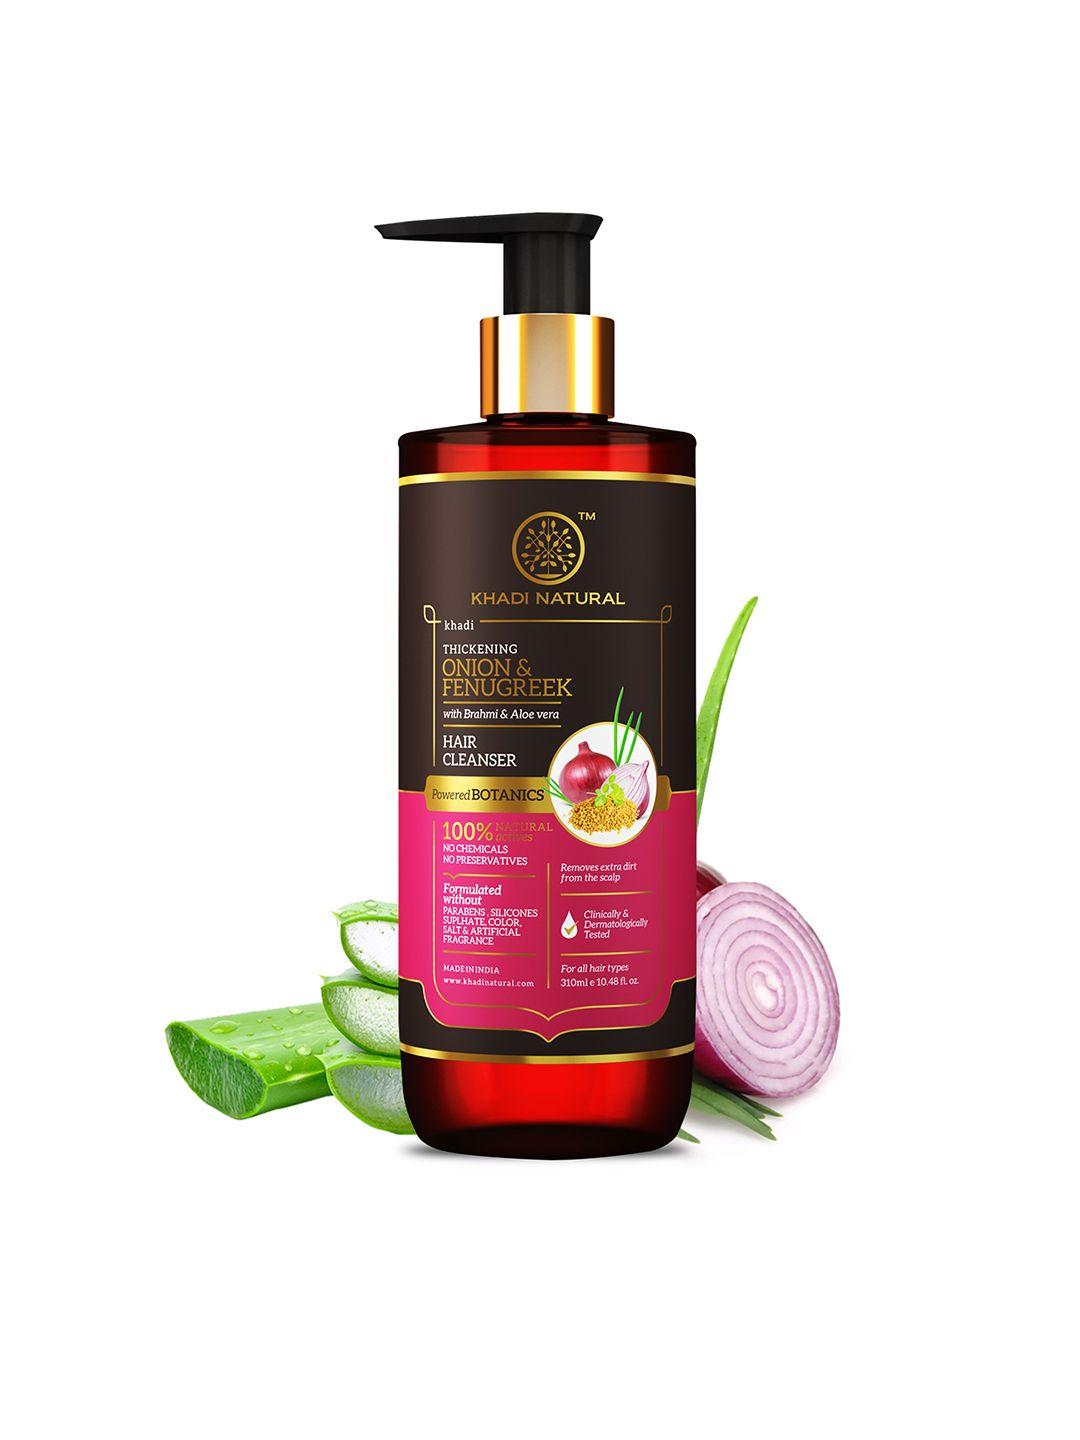 khadi natural powered botanics thickening onion & fenugreek hair cleanser - 310 ml